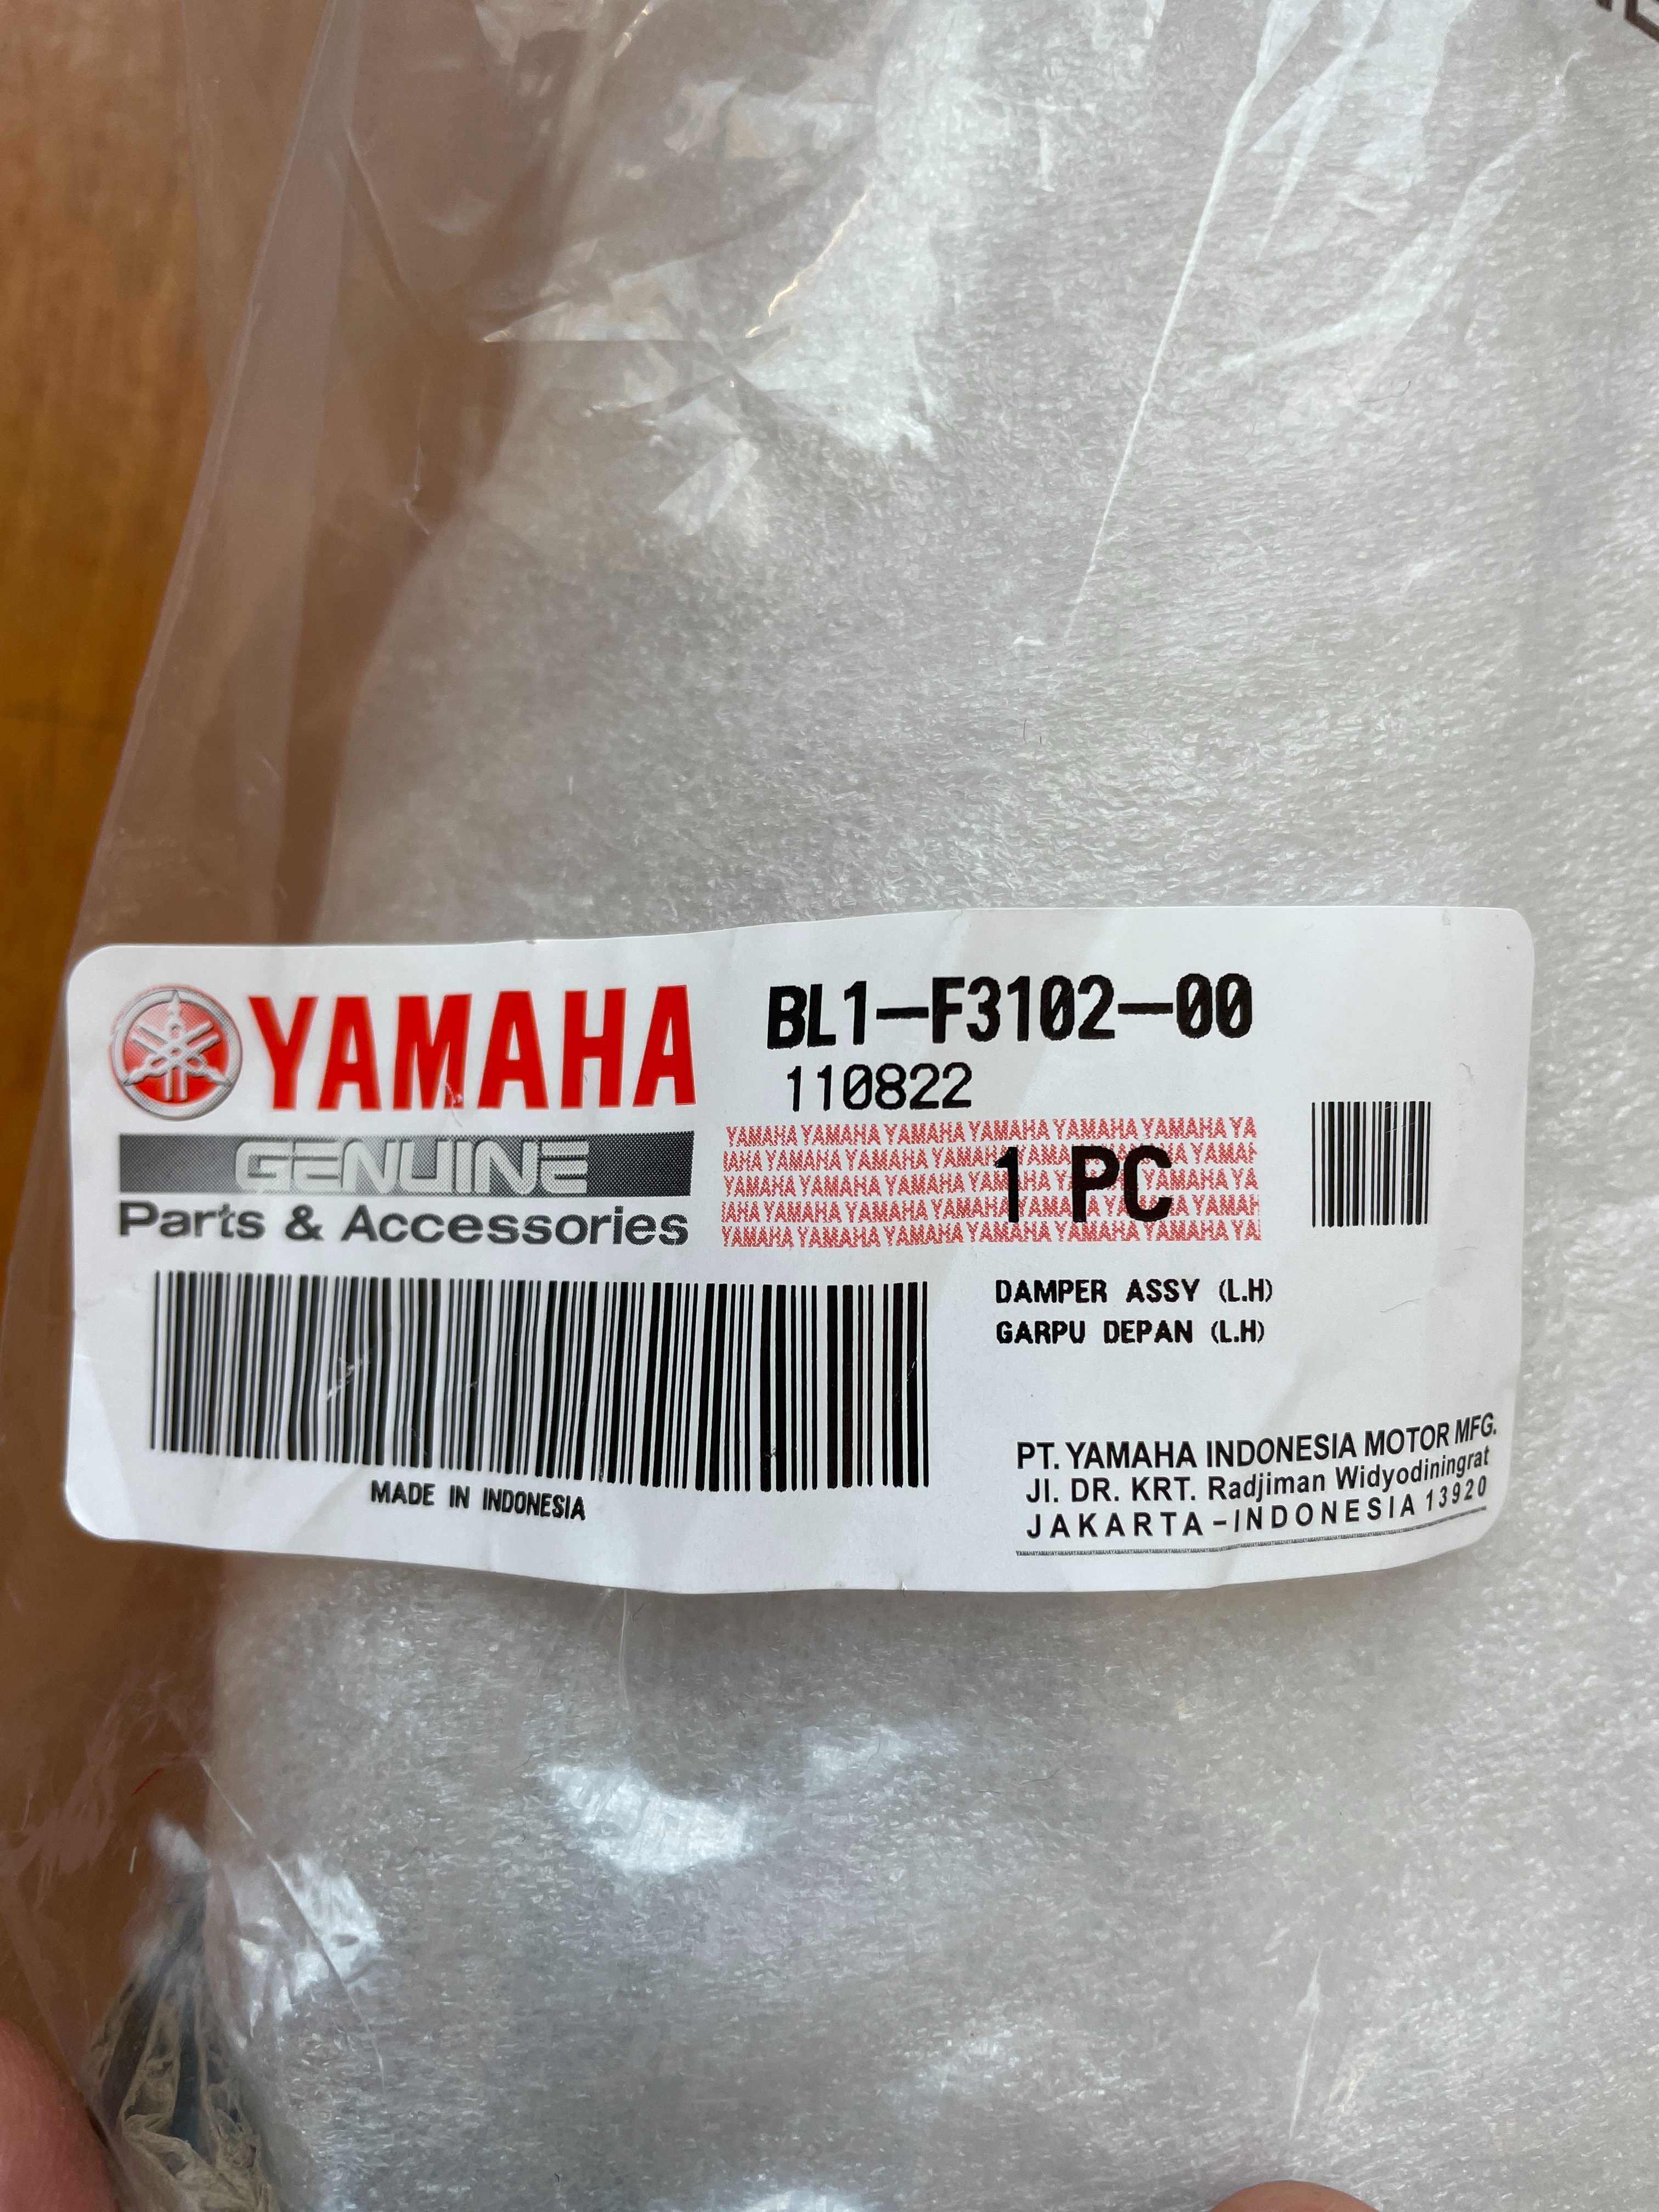 Suspensão Yamaha Xmax 300 ou 400 - REF BL1F310200